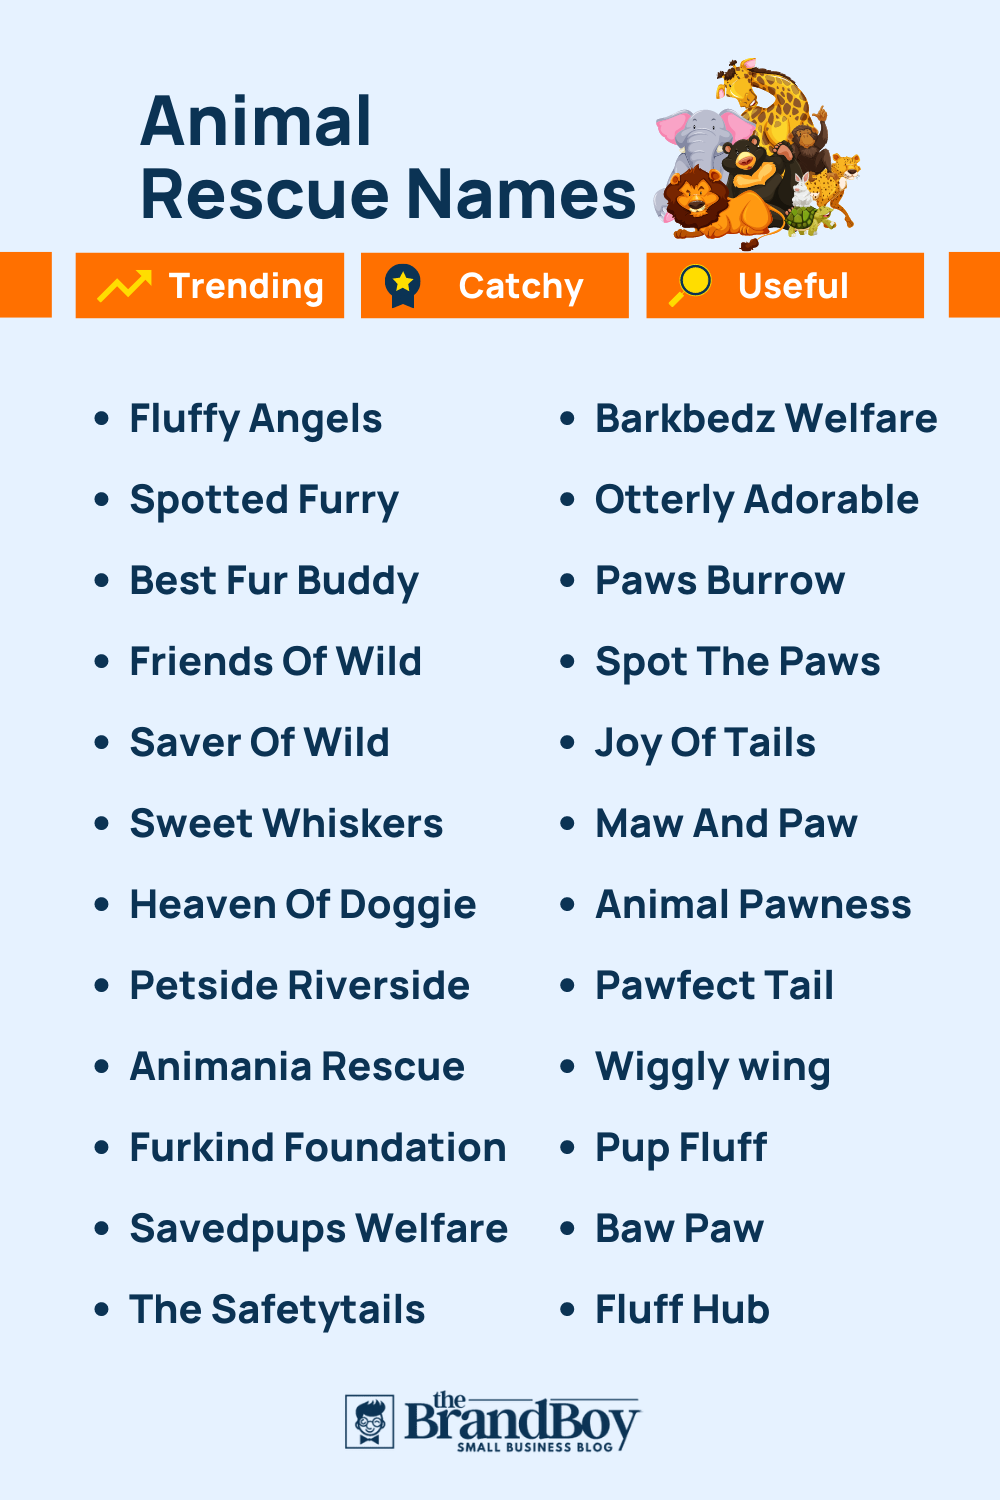 Adopt Me Gorilla Pet Name Ideas List - DigiStatement